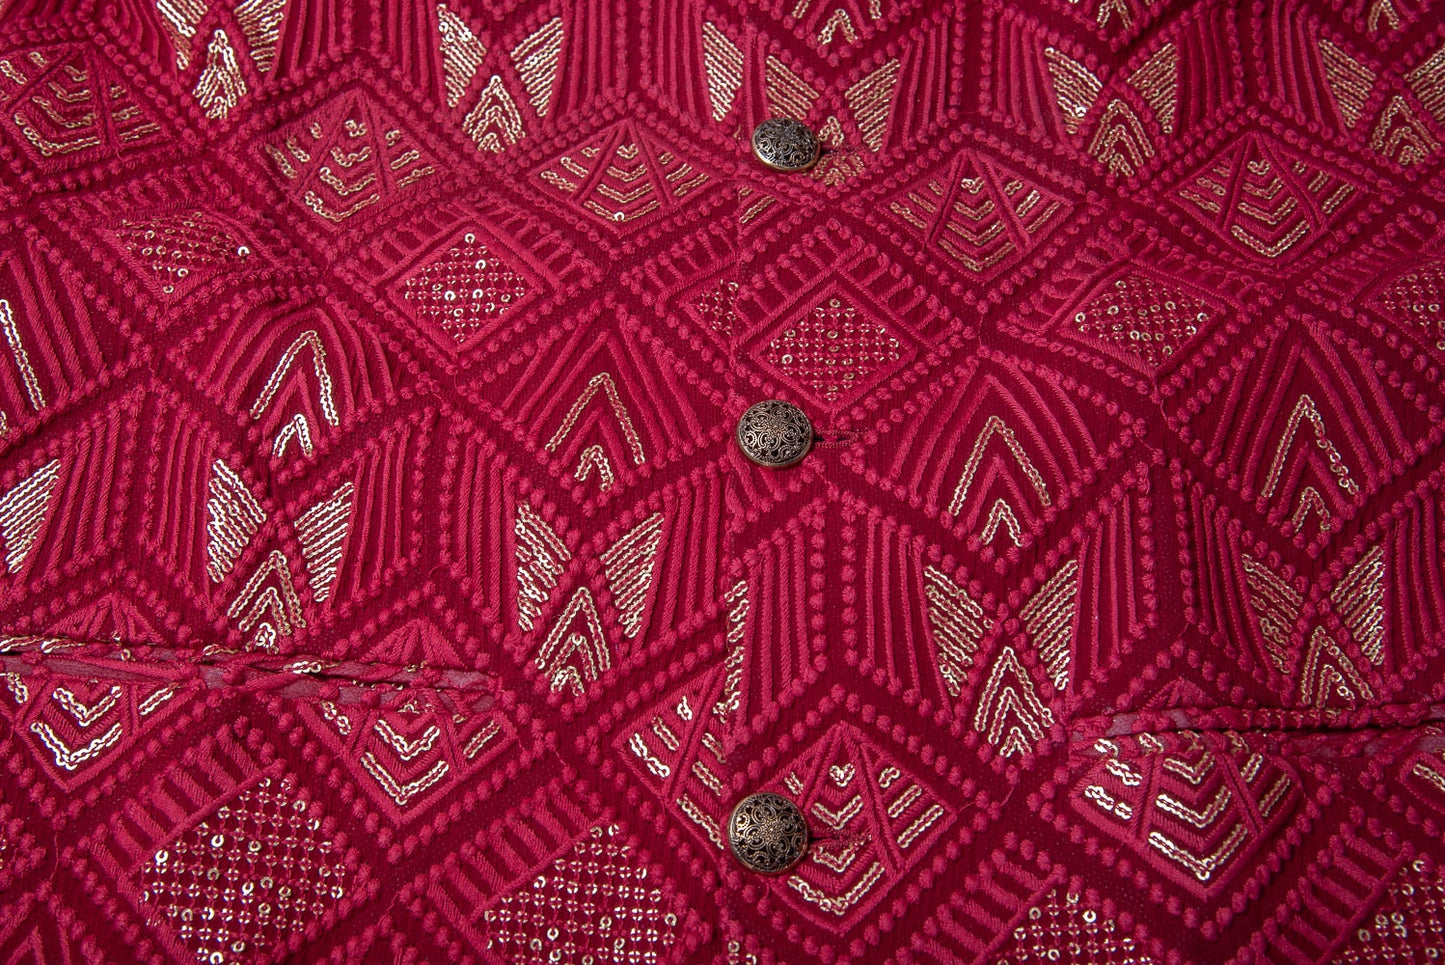 Red Aztec design Jacket with sequince